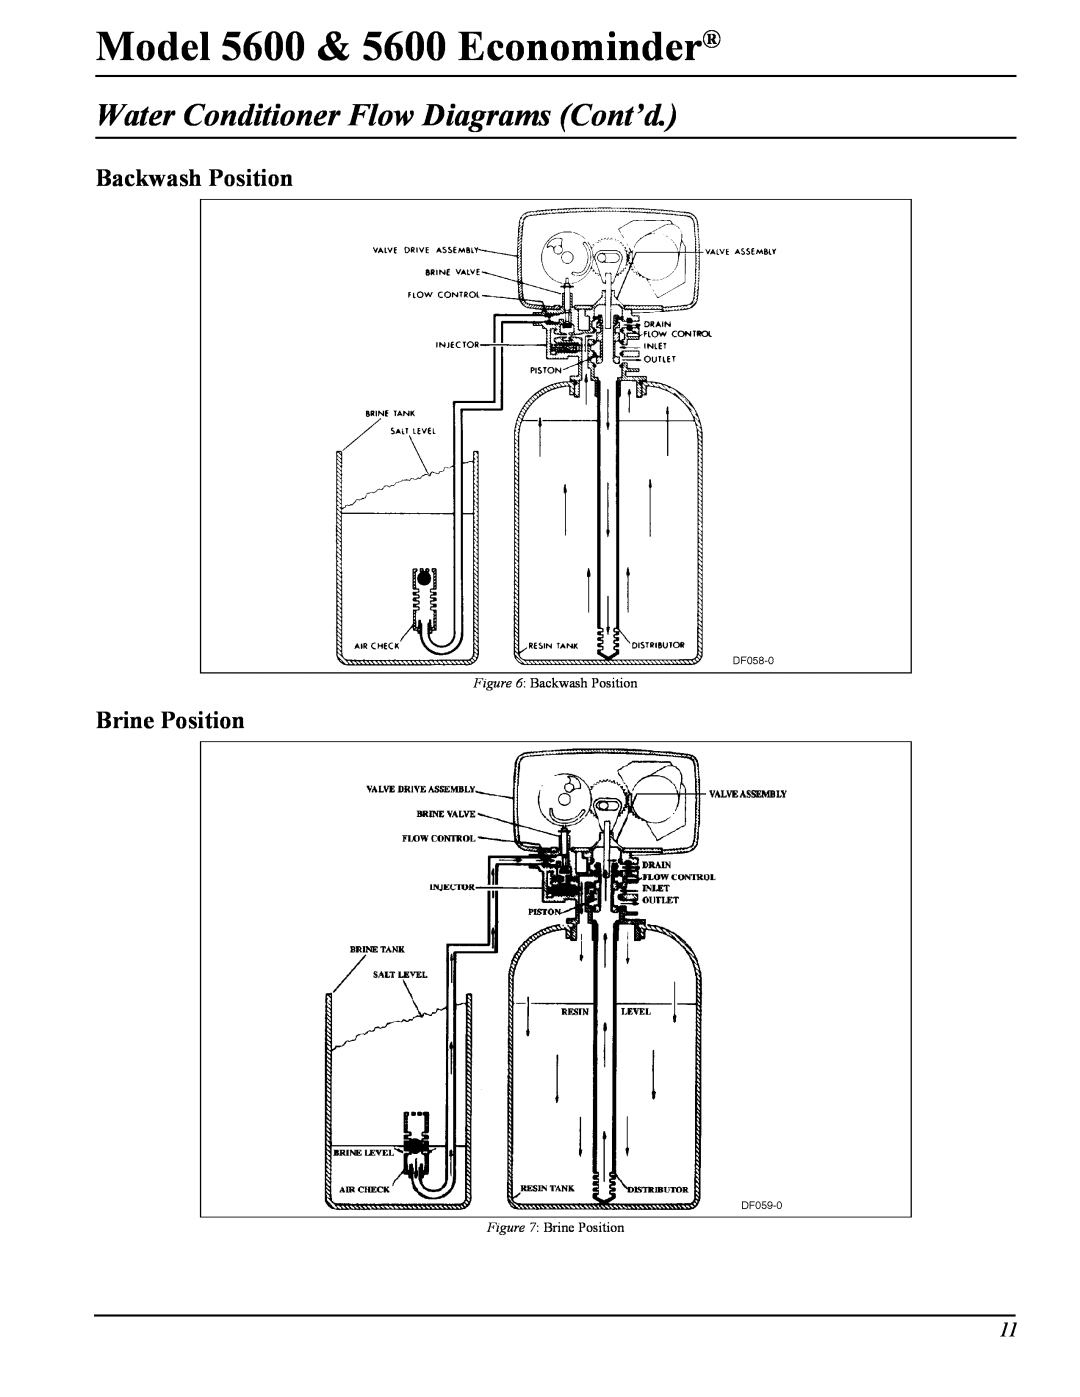 Pentair Model 5600 & 5600 Econominder manual Water Conditioner Flow Diagrams Cont’d, Backwash Position, Brine Position 